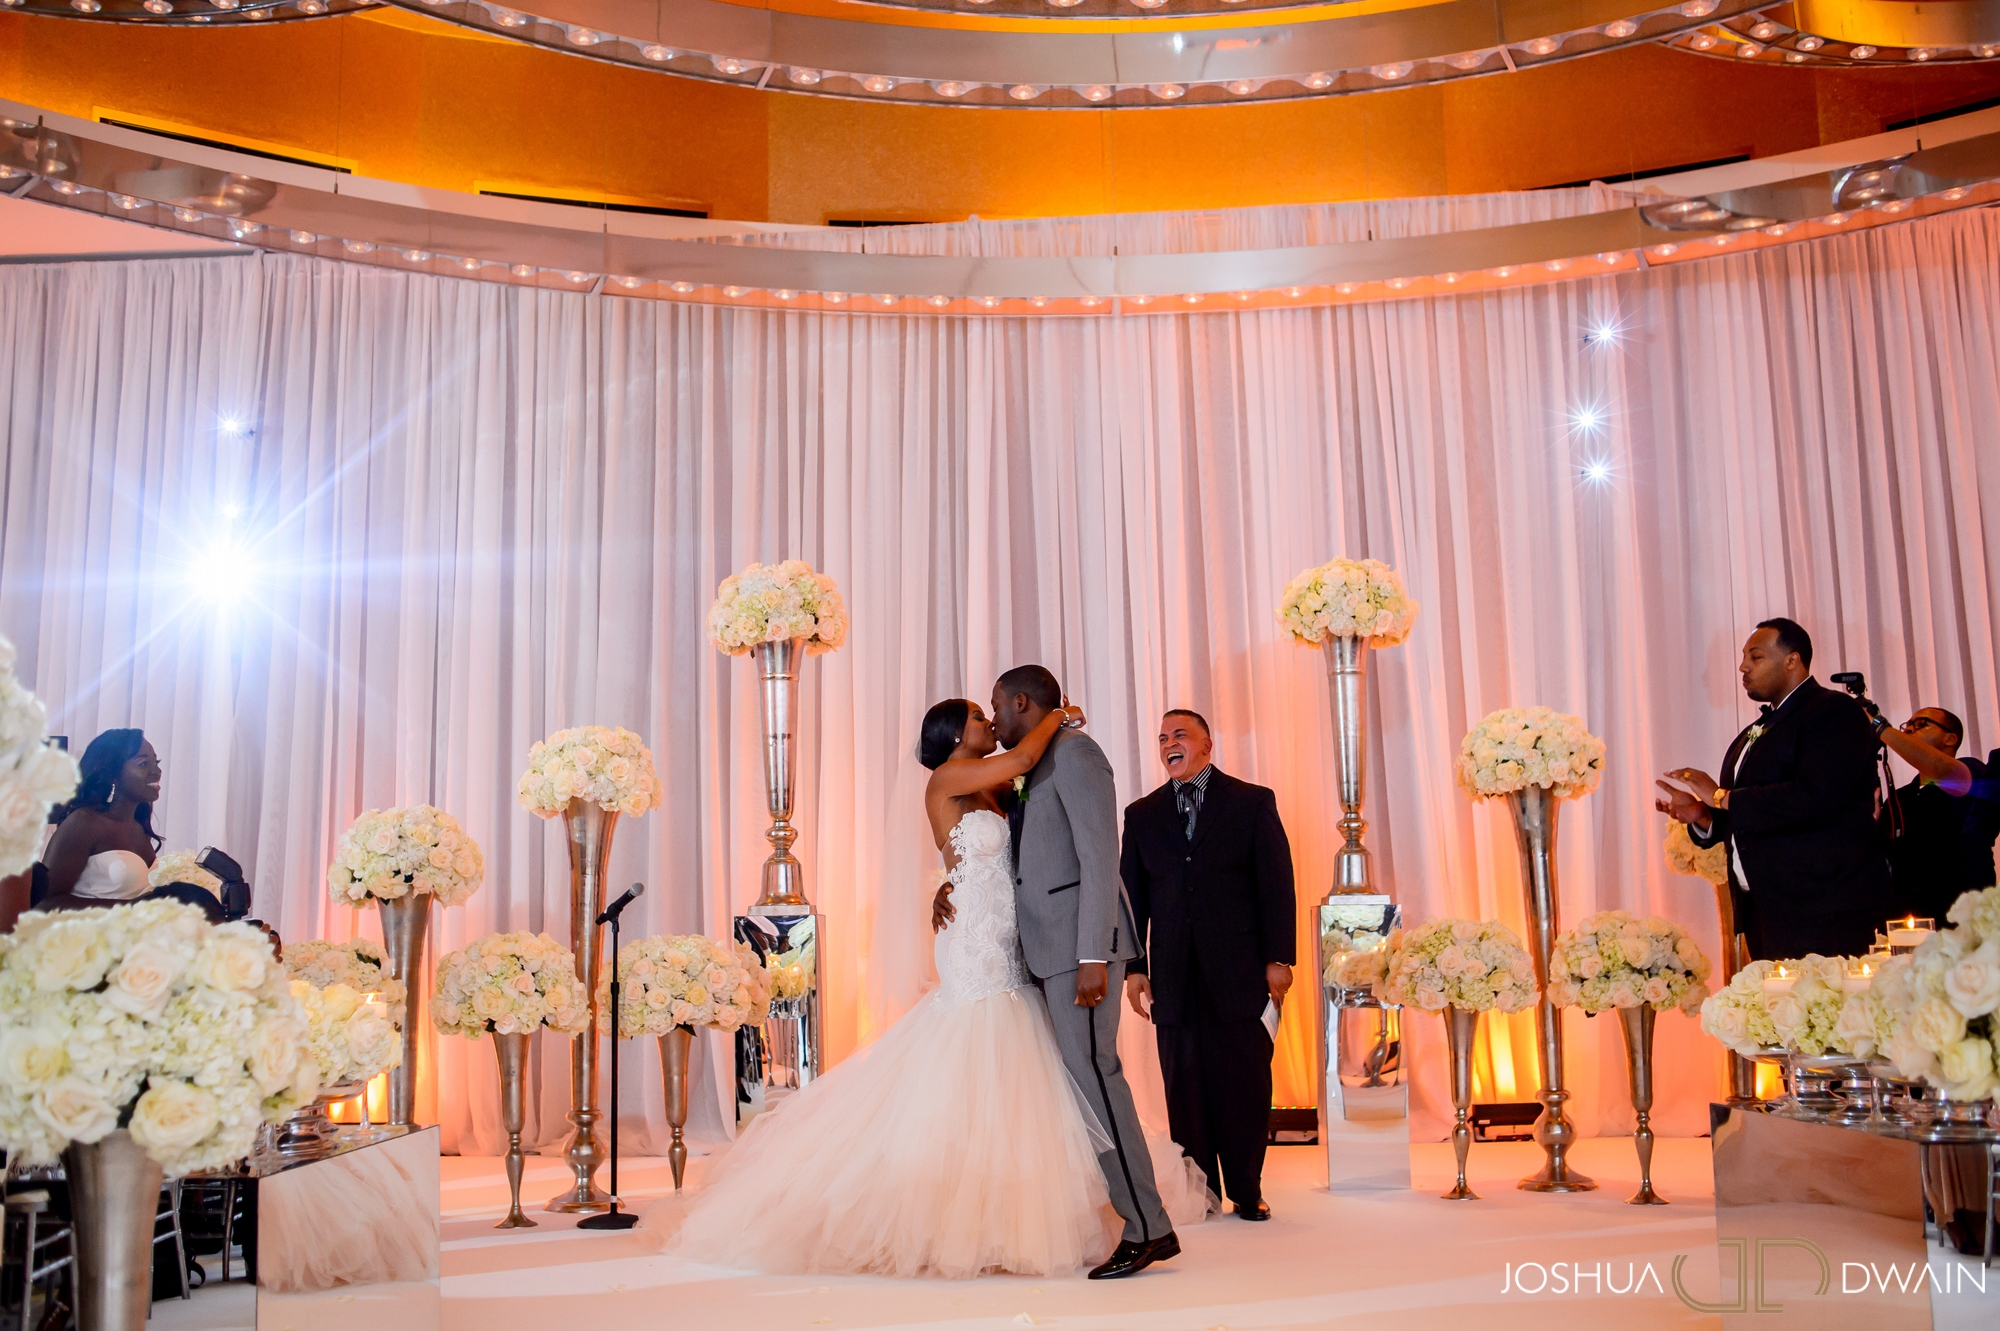 Lauren & Elobuike's Wedding at the Renaissance Arlington Capital View Hotel http://www.joshuadwain.com